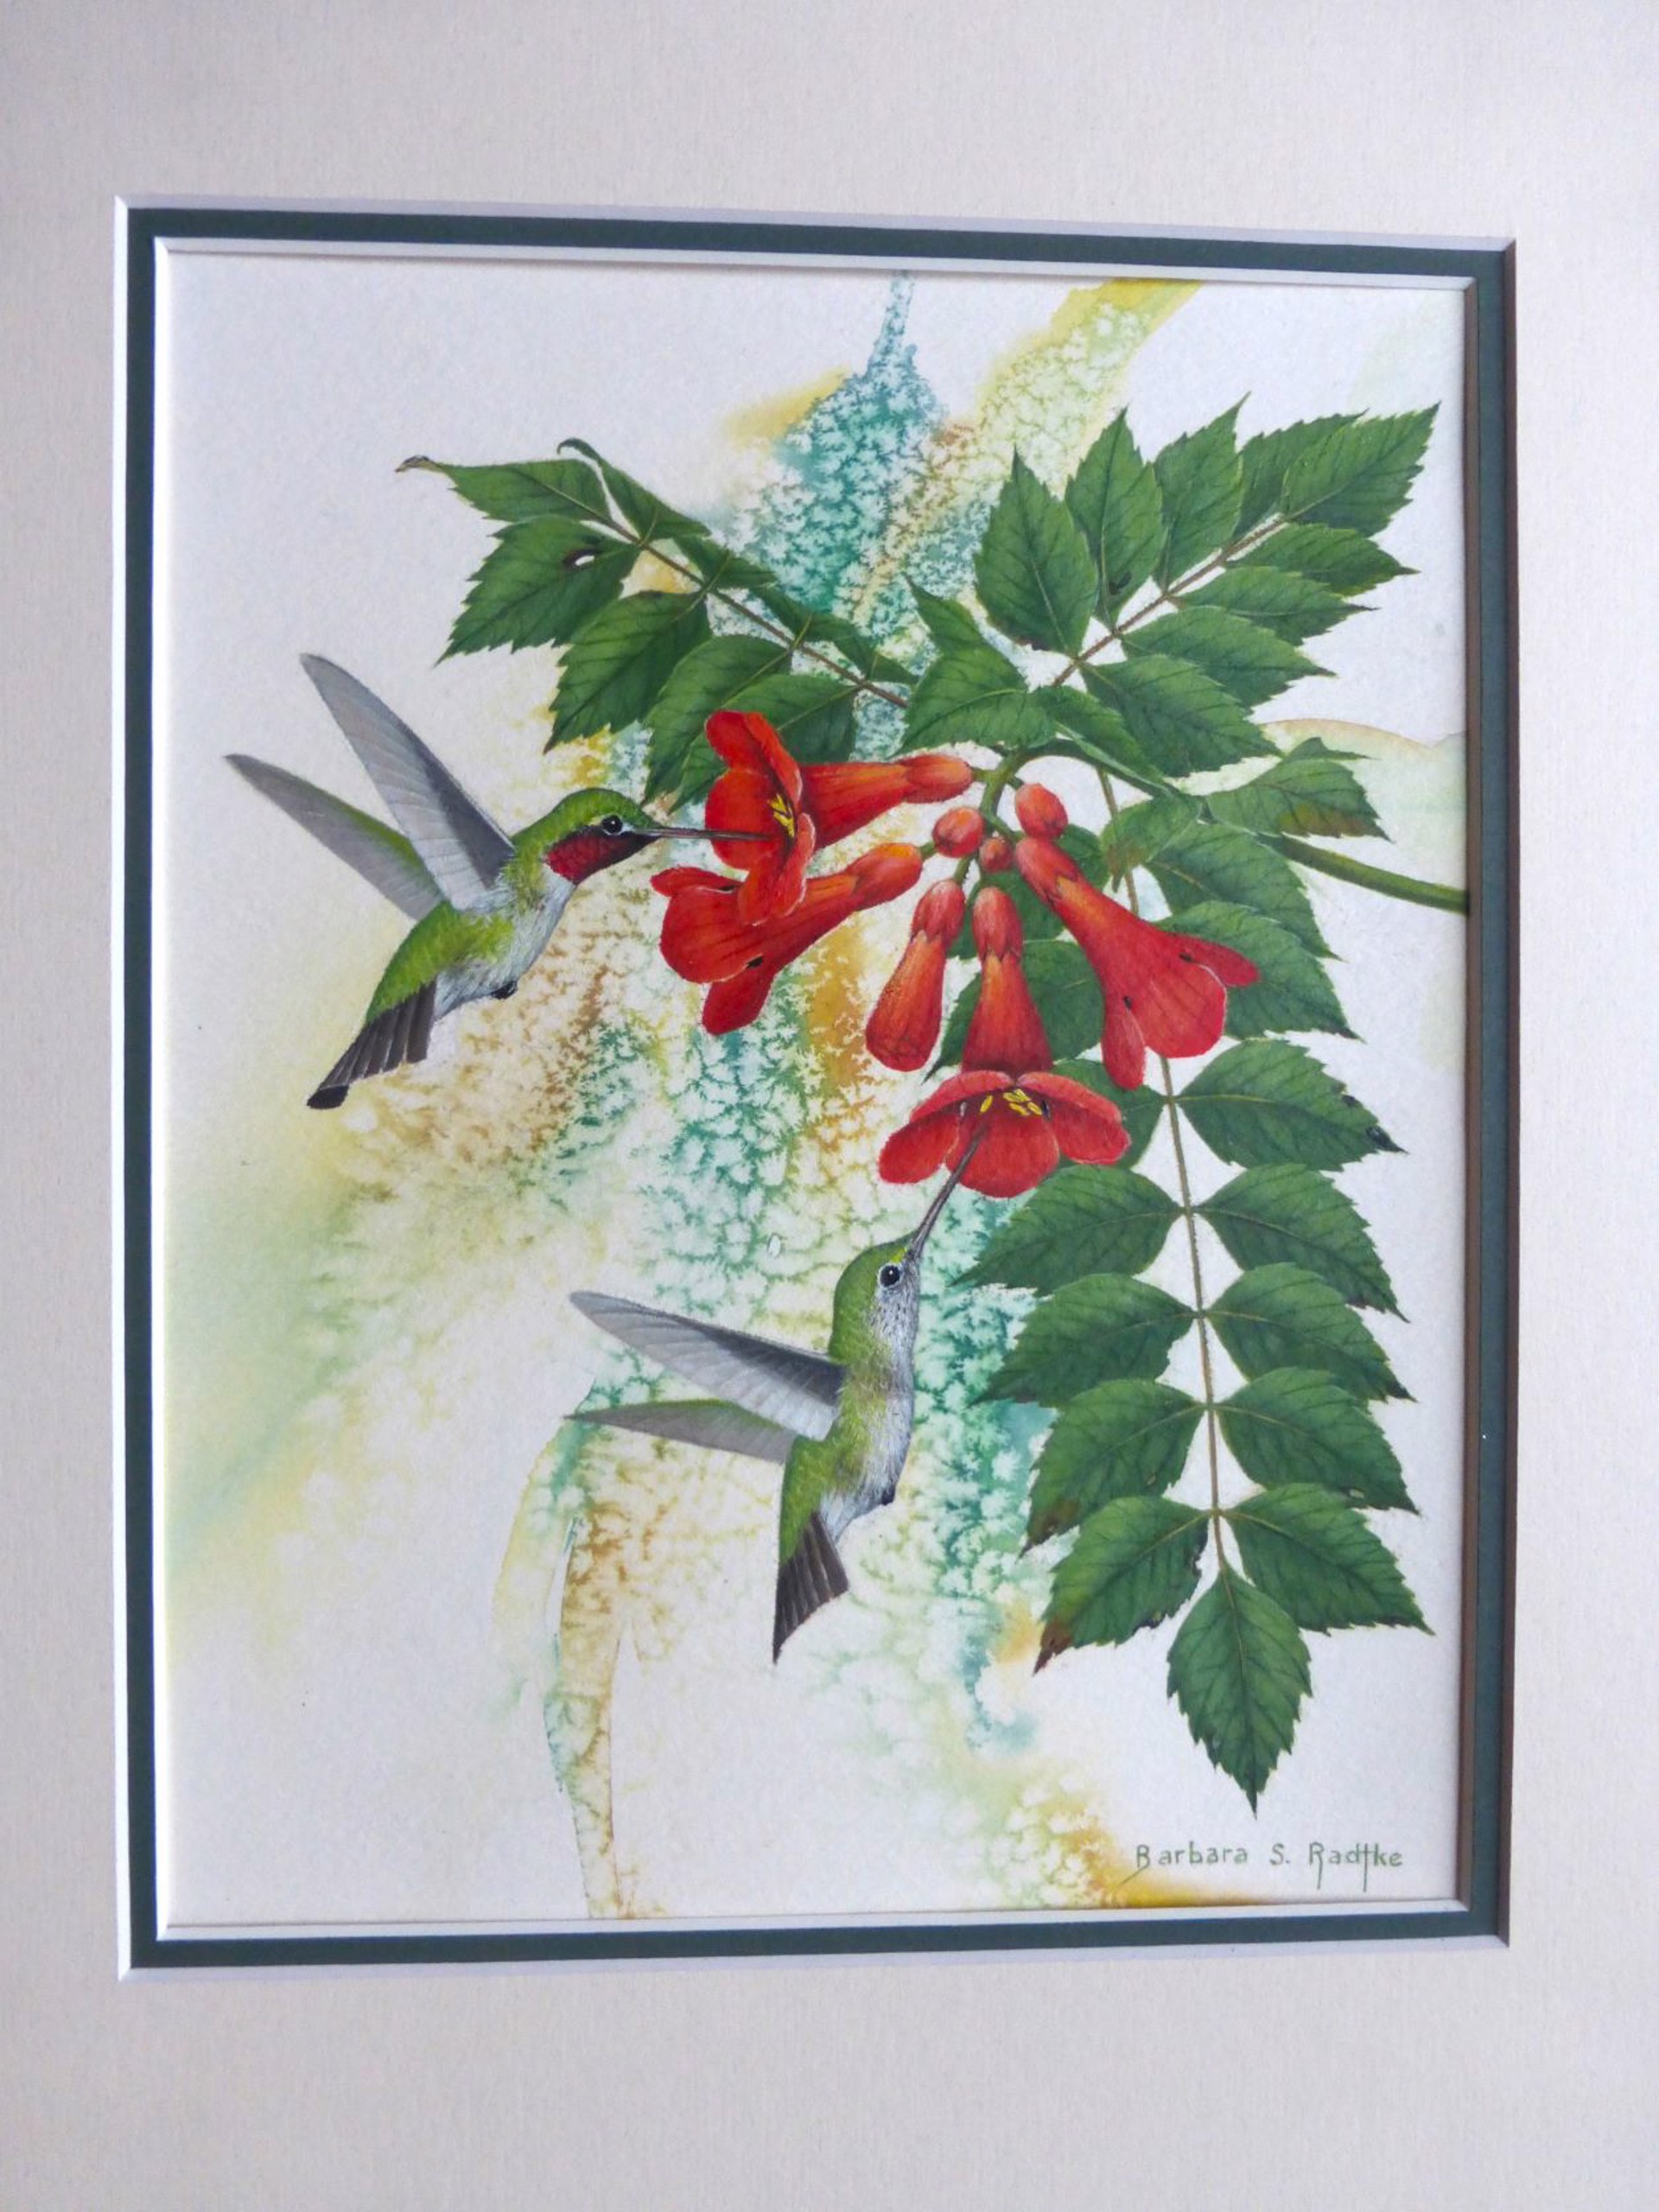 July Trumpets Calling - Ruby Throated Hummingbirds by Barbara Radtke